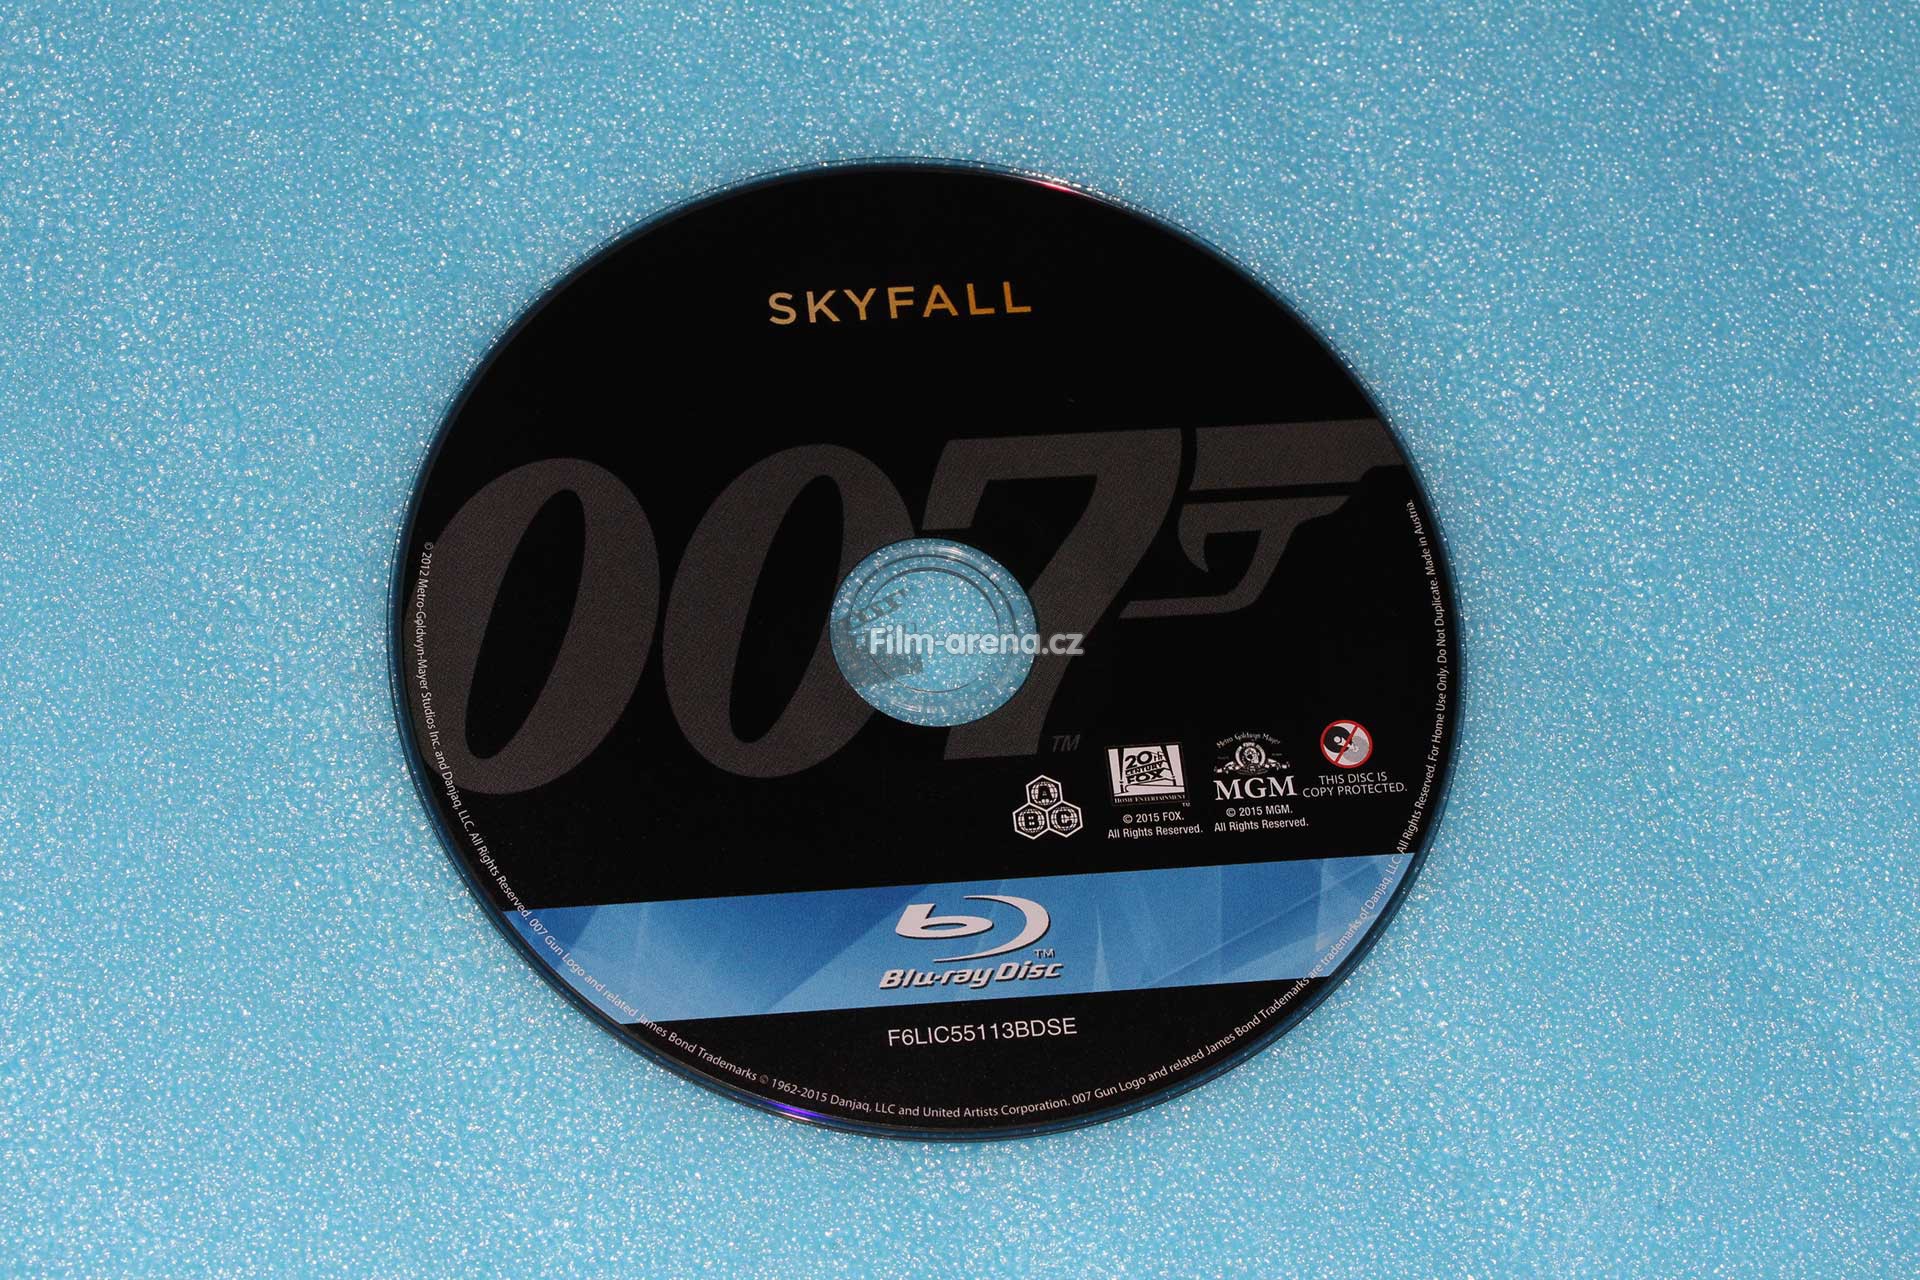 http://www.filmarena.cz/upload/images/nazivo/James_Bond/2012_Skyfall/2012_skyfall_06.jpg